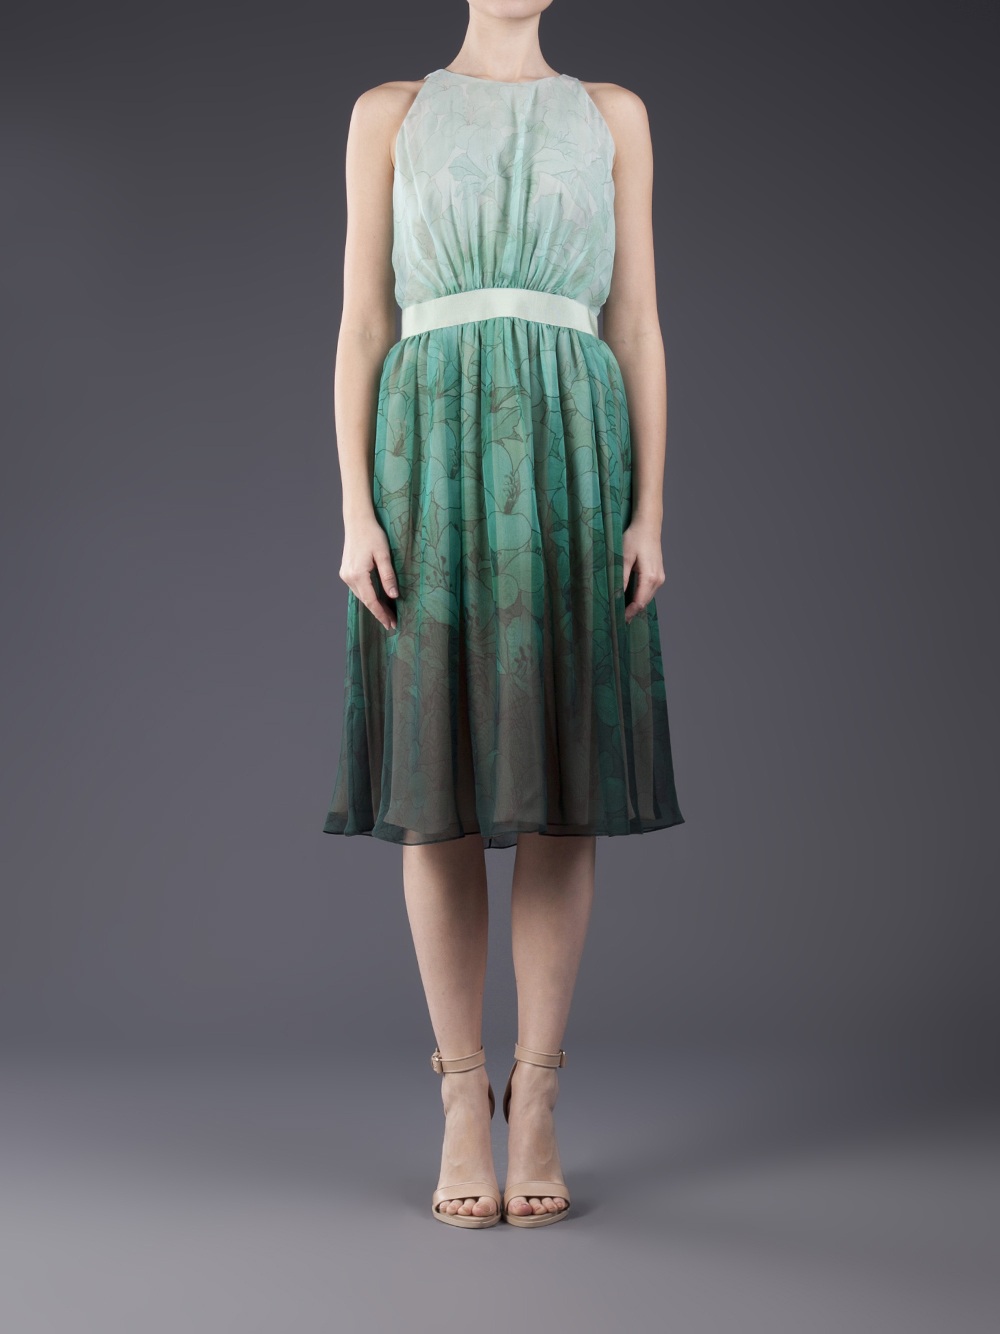 Giambattista valli Sleeveless Floral Dress in Green | Lyst